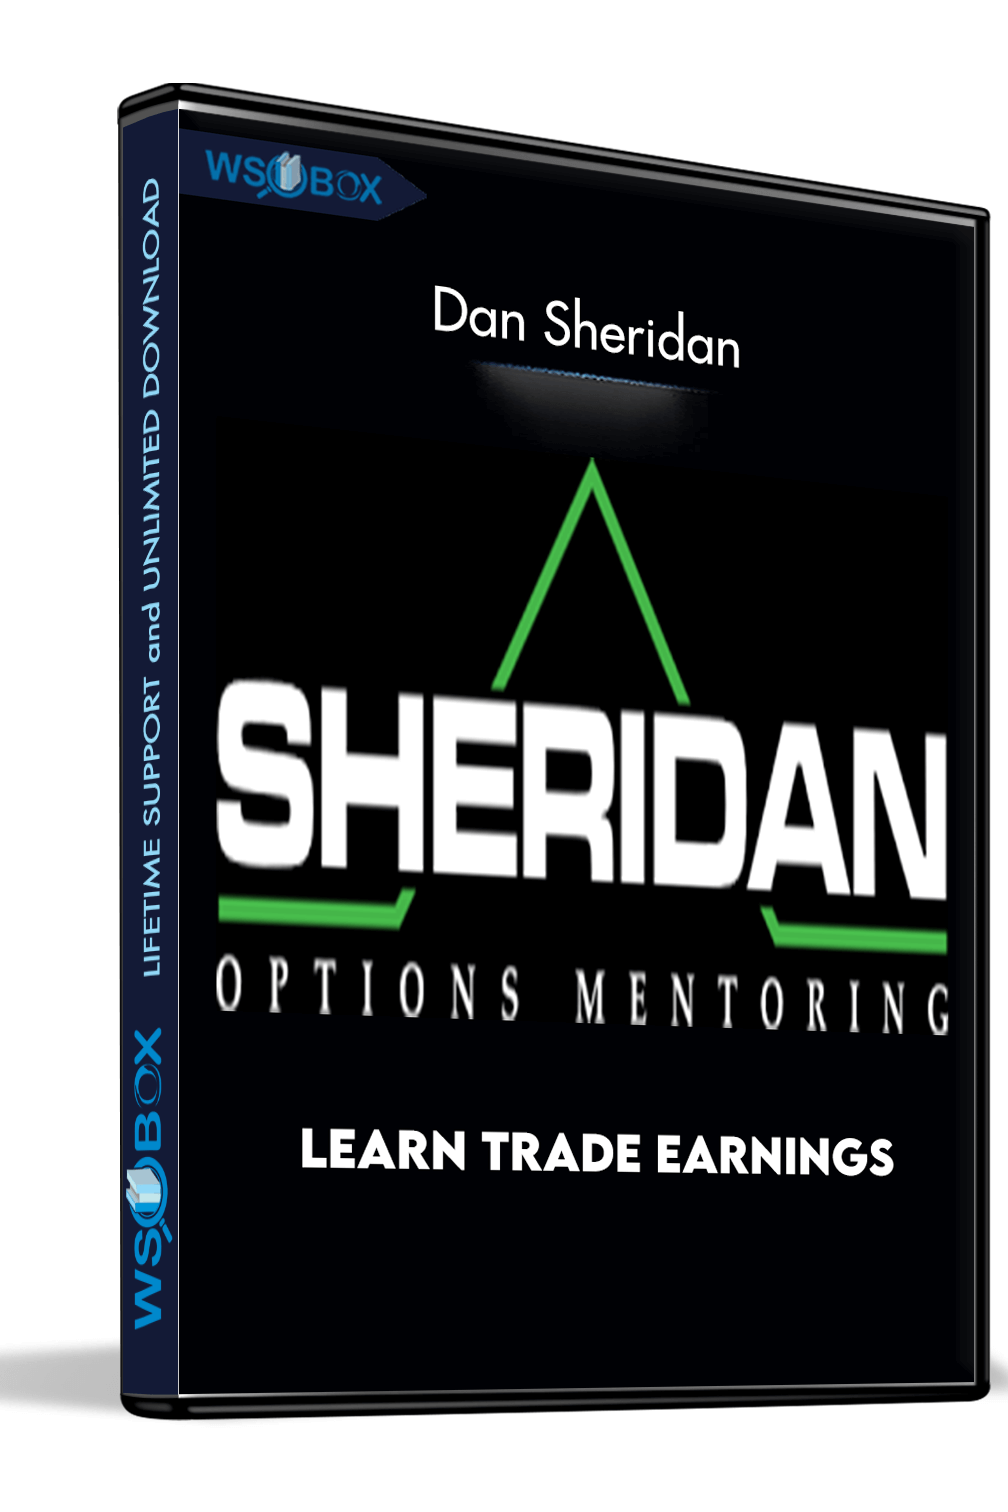 learn-trade-earnings-dan-sheridan